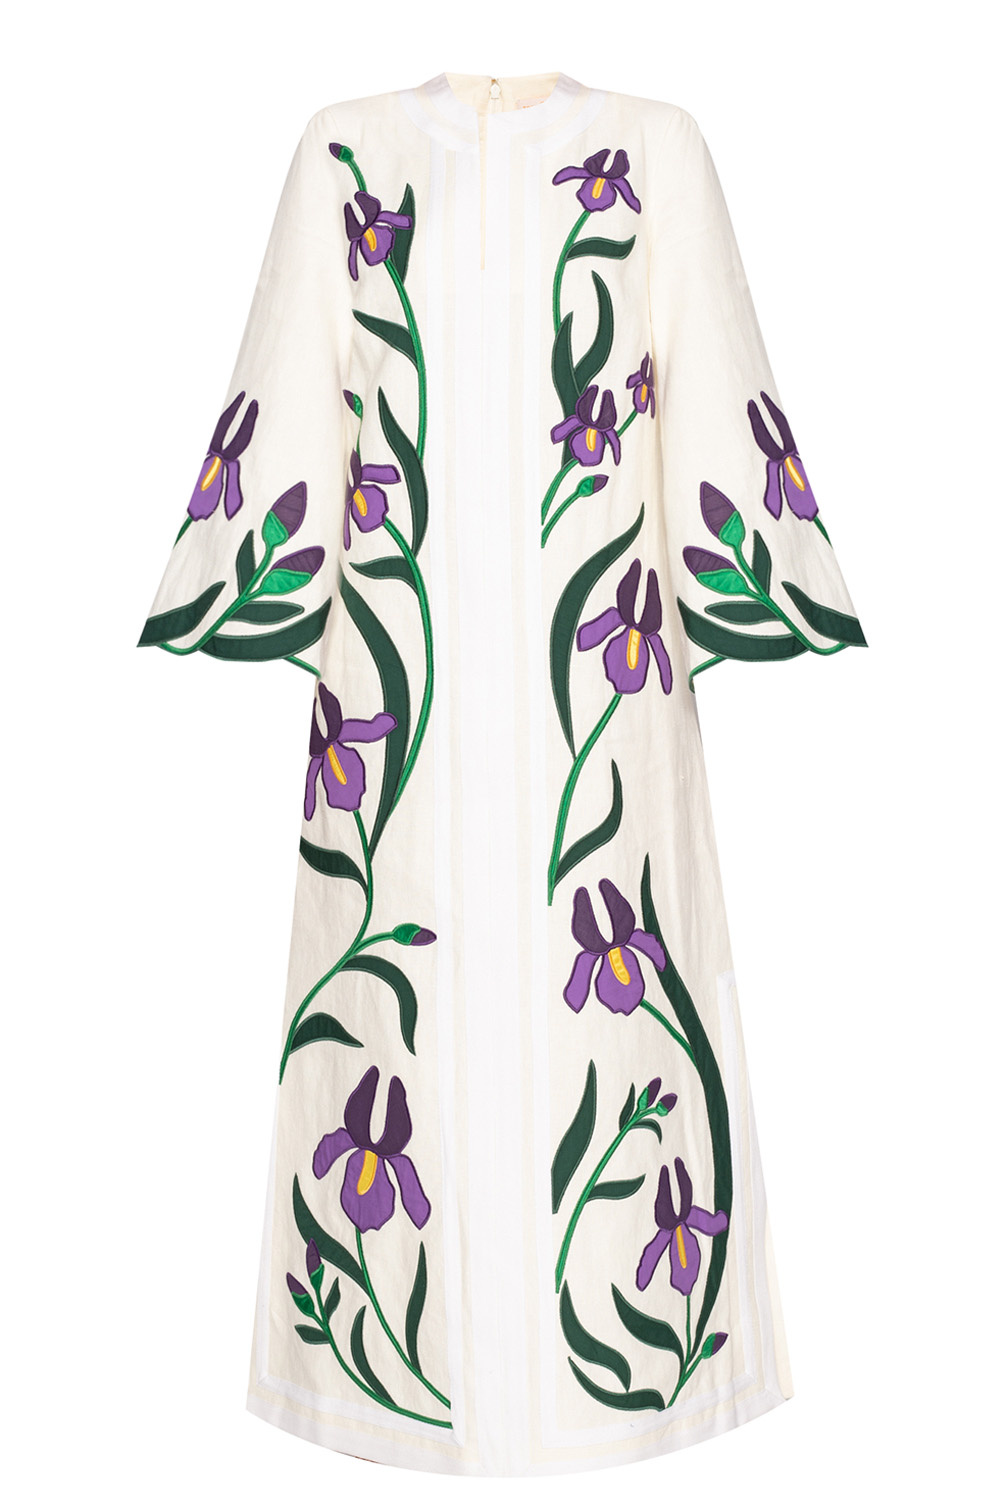 IetpShops Ukraine - Dress with floral motif Tory Burch - Paris Shirt Dress